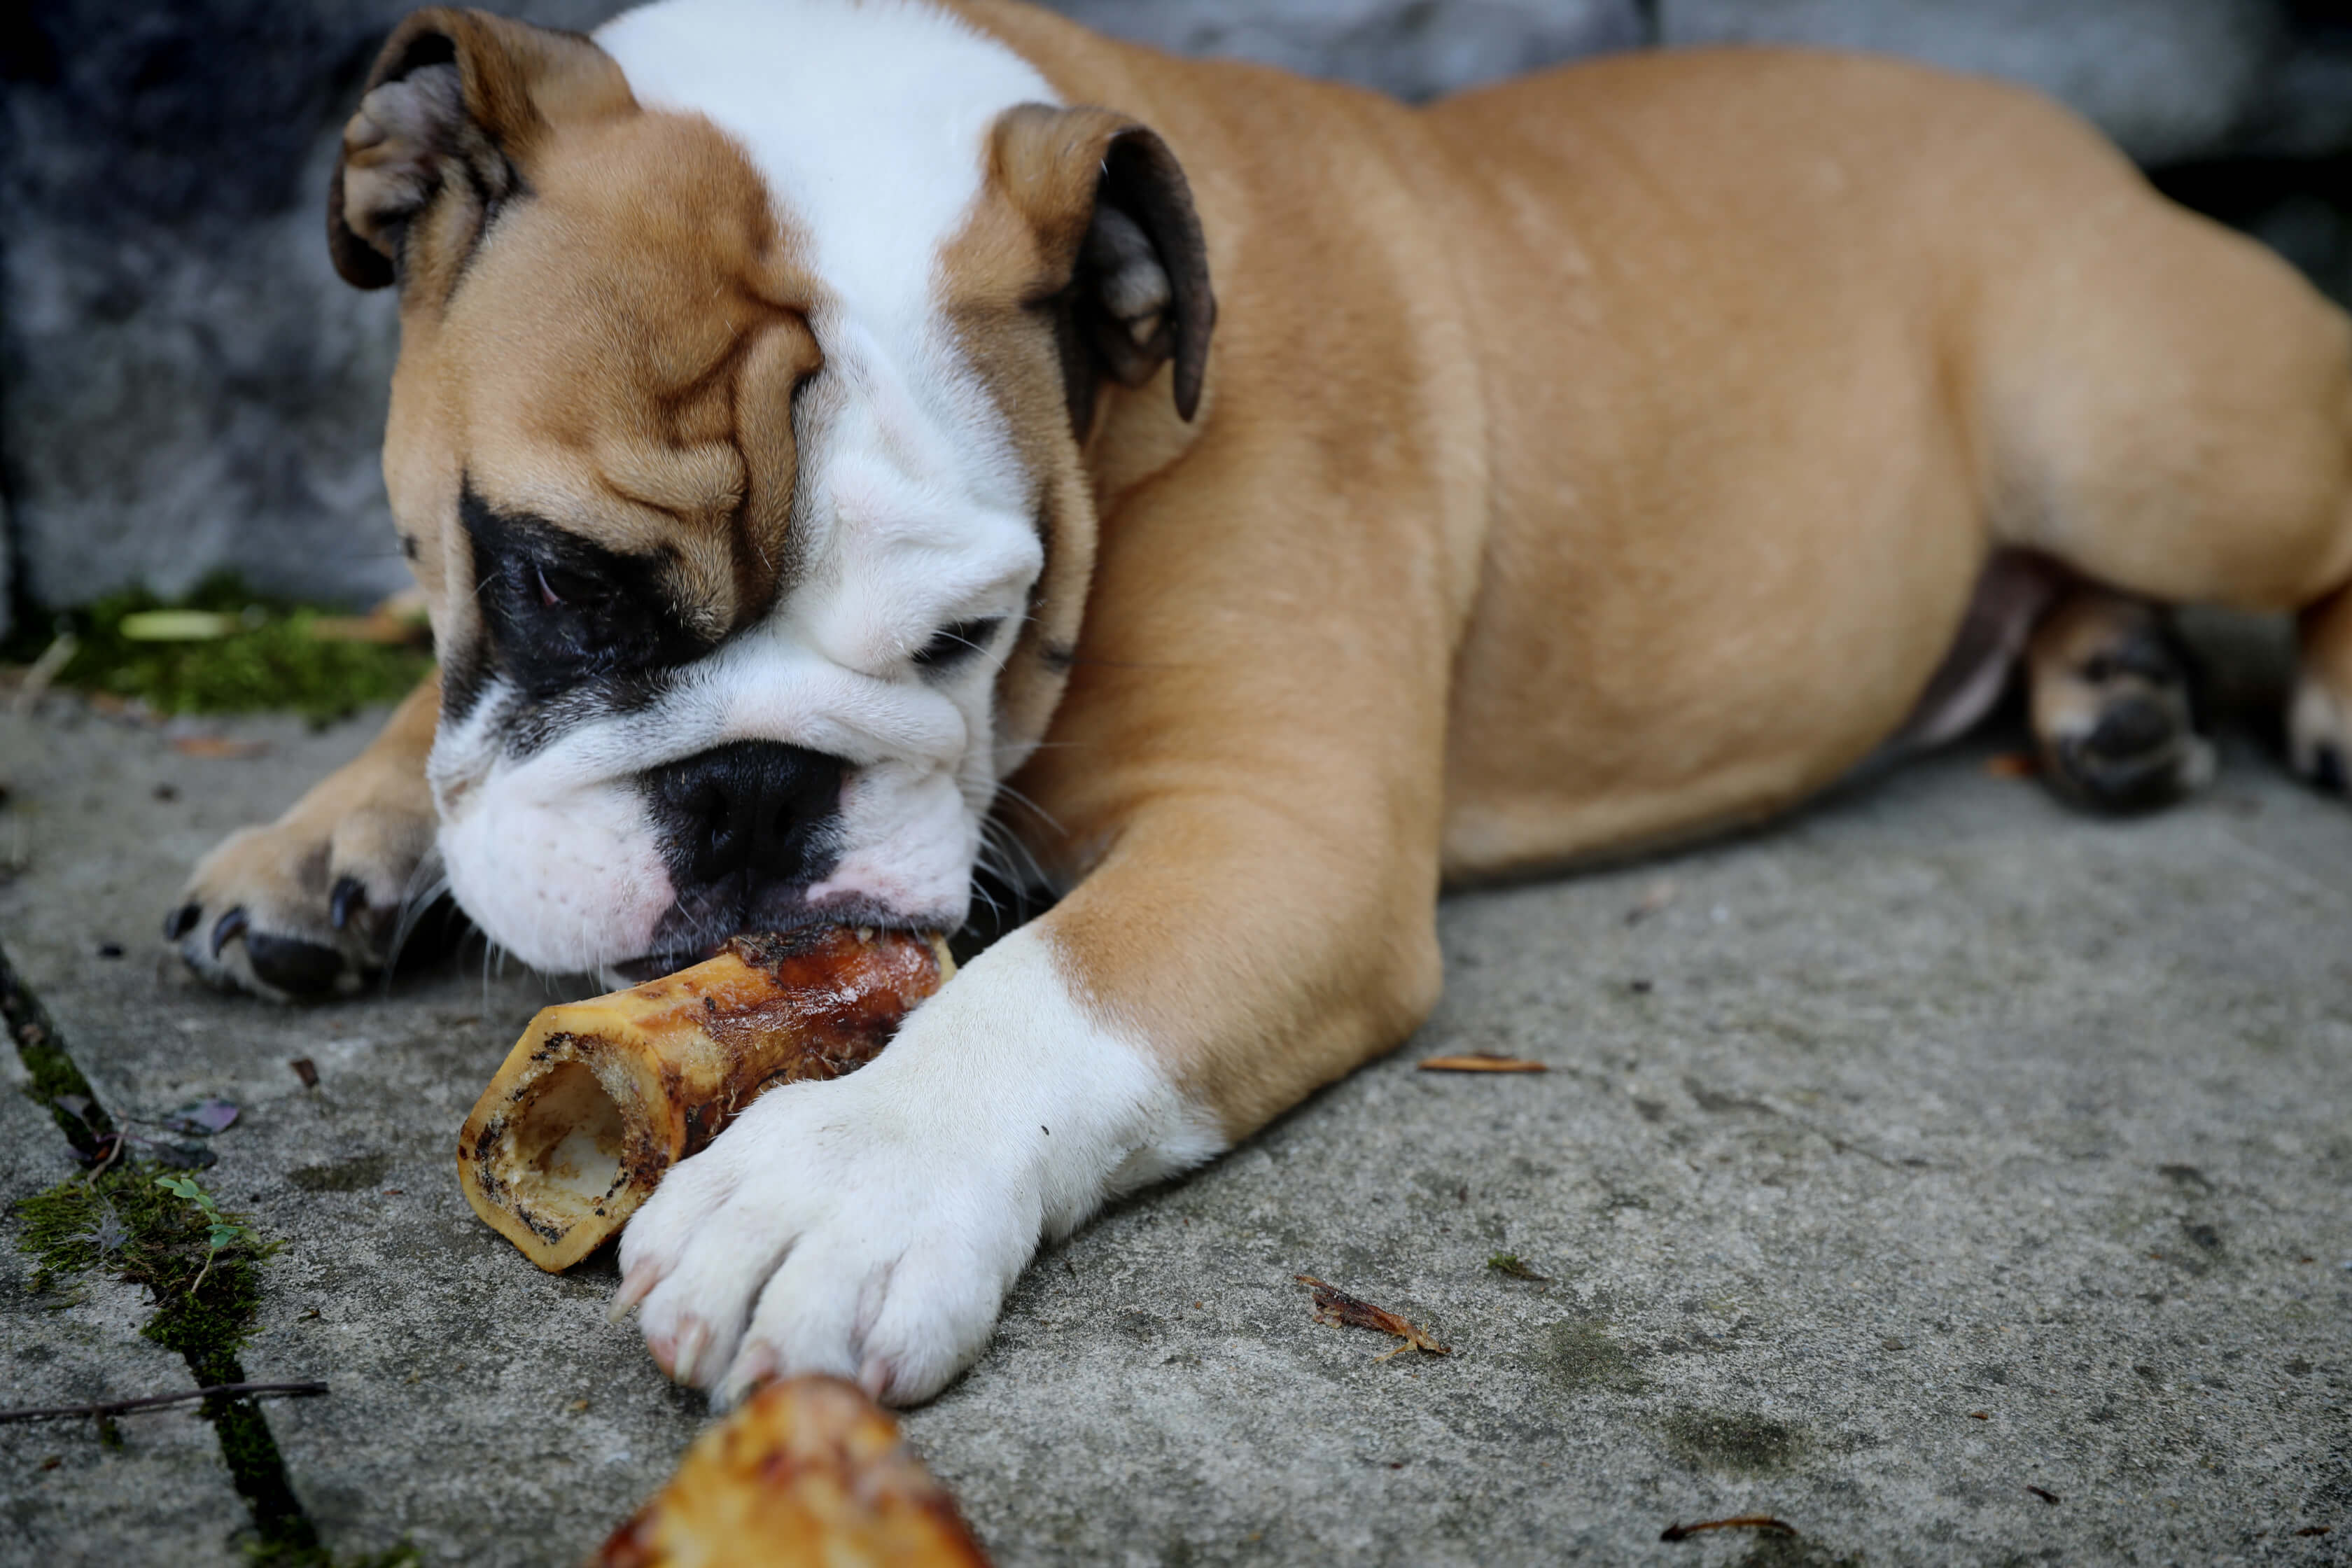 dog with peanut butter dog bones